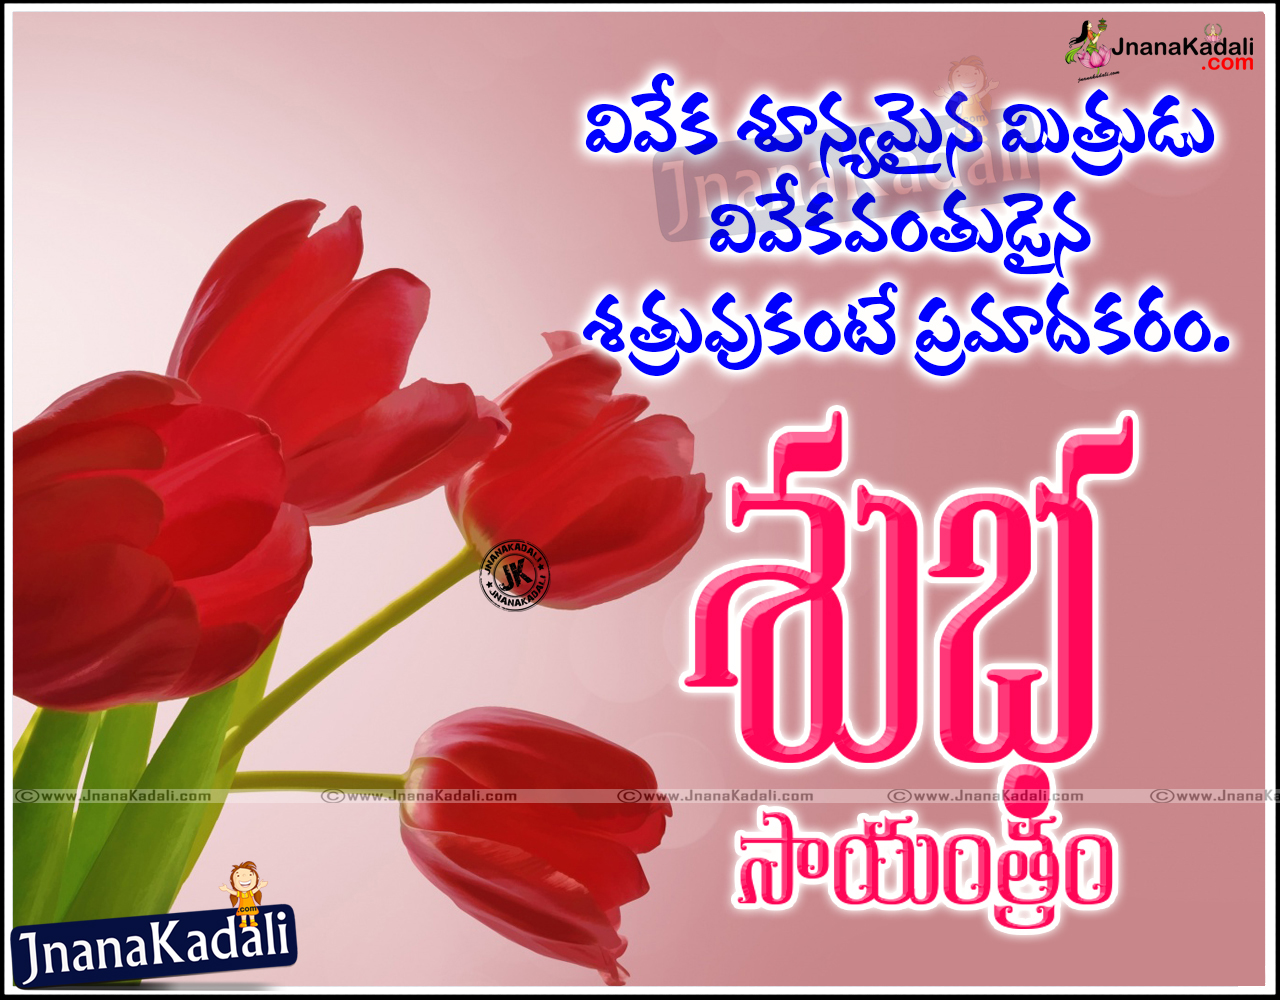 Telugu Good Evening Quotations and Greetings | JNANA KADALI.COM ...